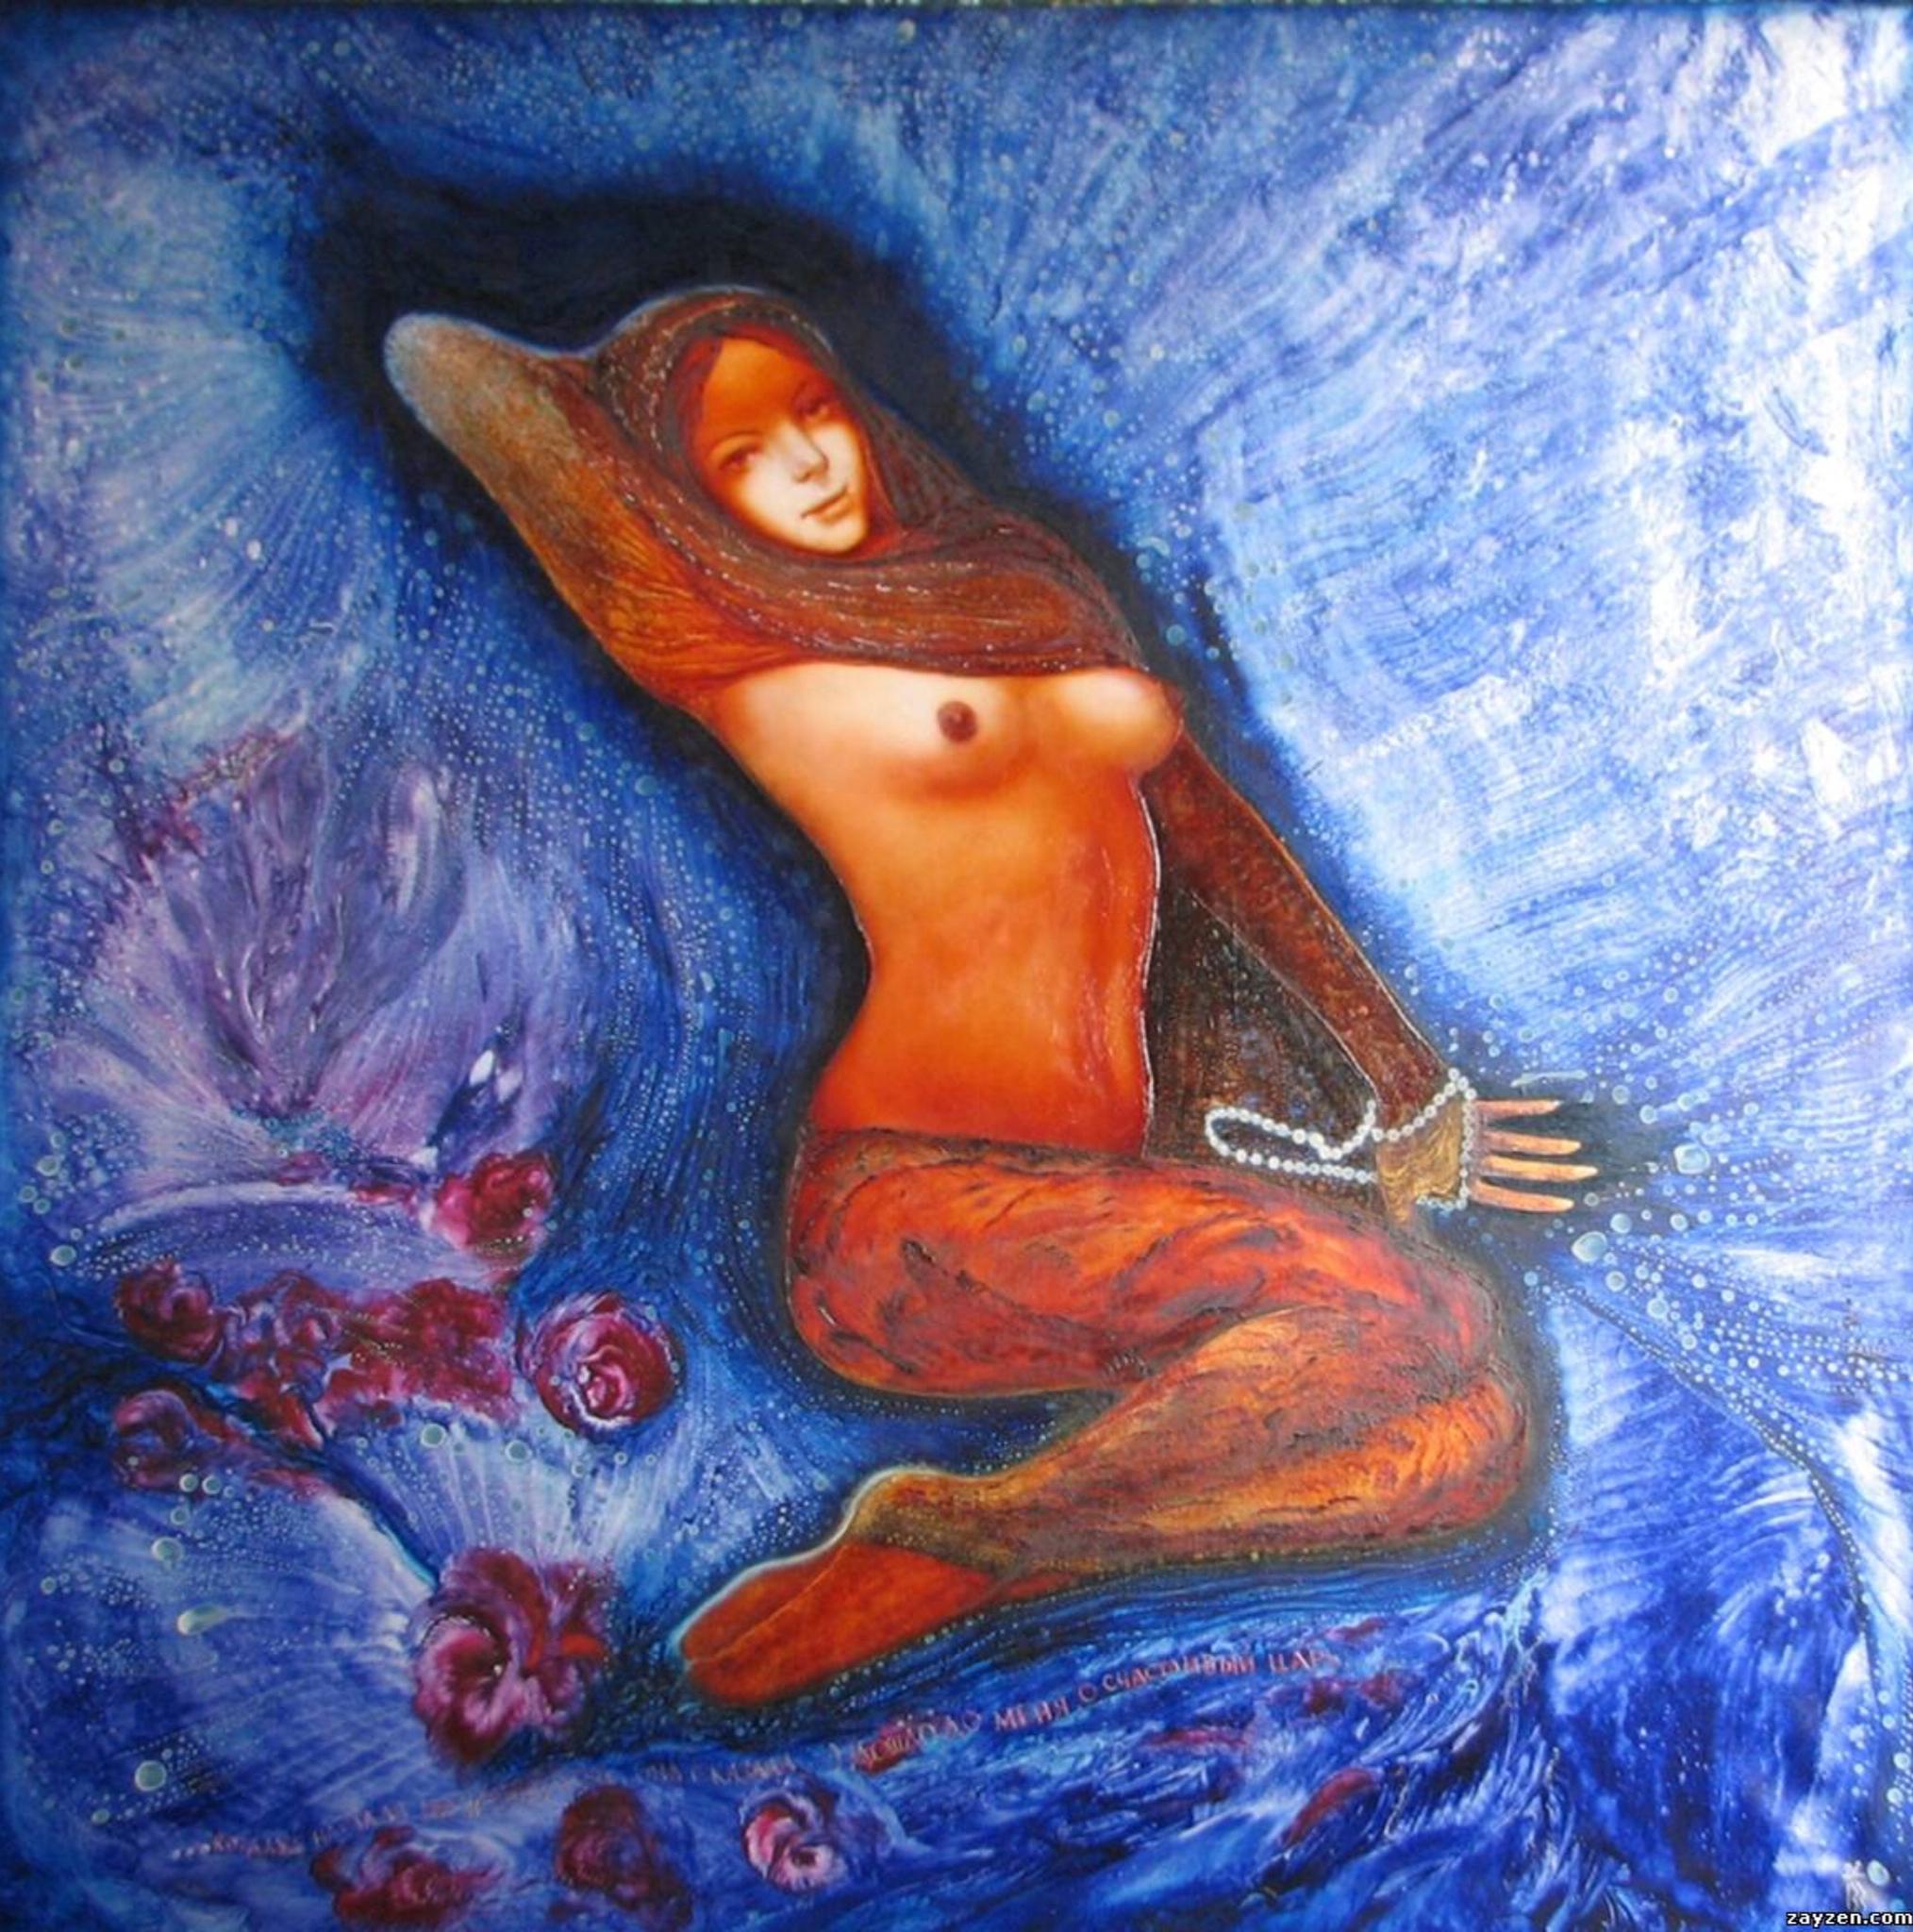 Volodymyr Zayichenko Portrait Painting - Nude art portrait oil painting pop art icon Marlyn Monroe - 1001 night tales